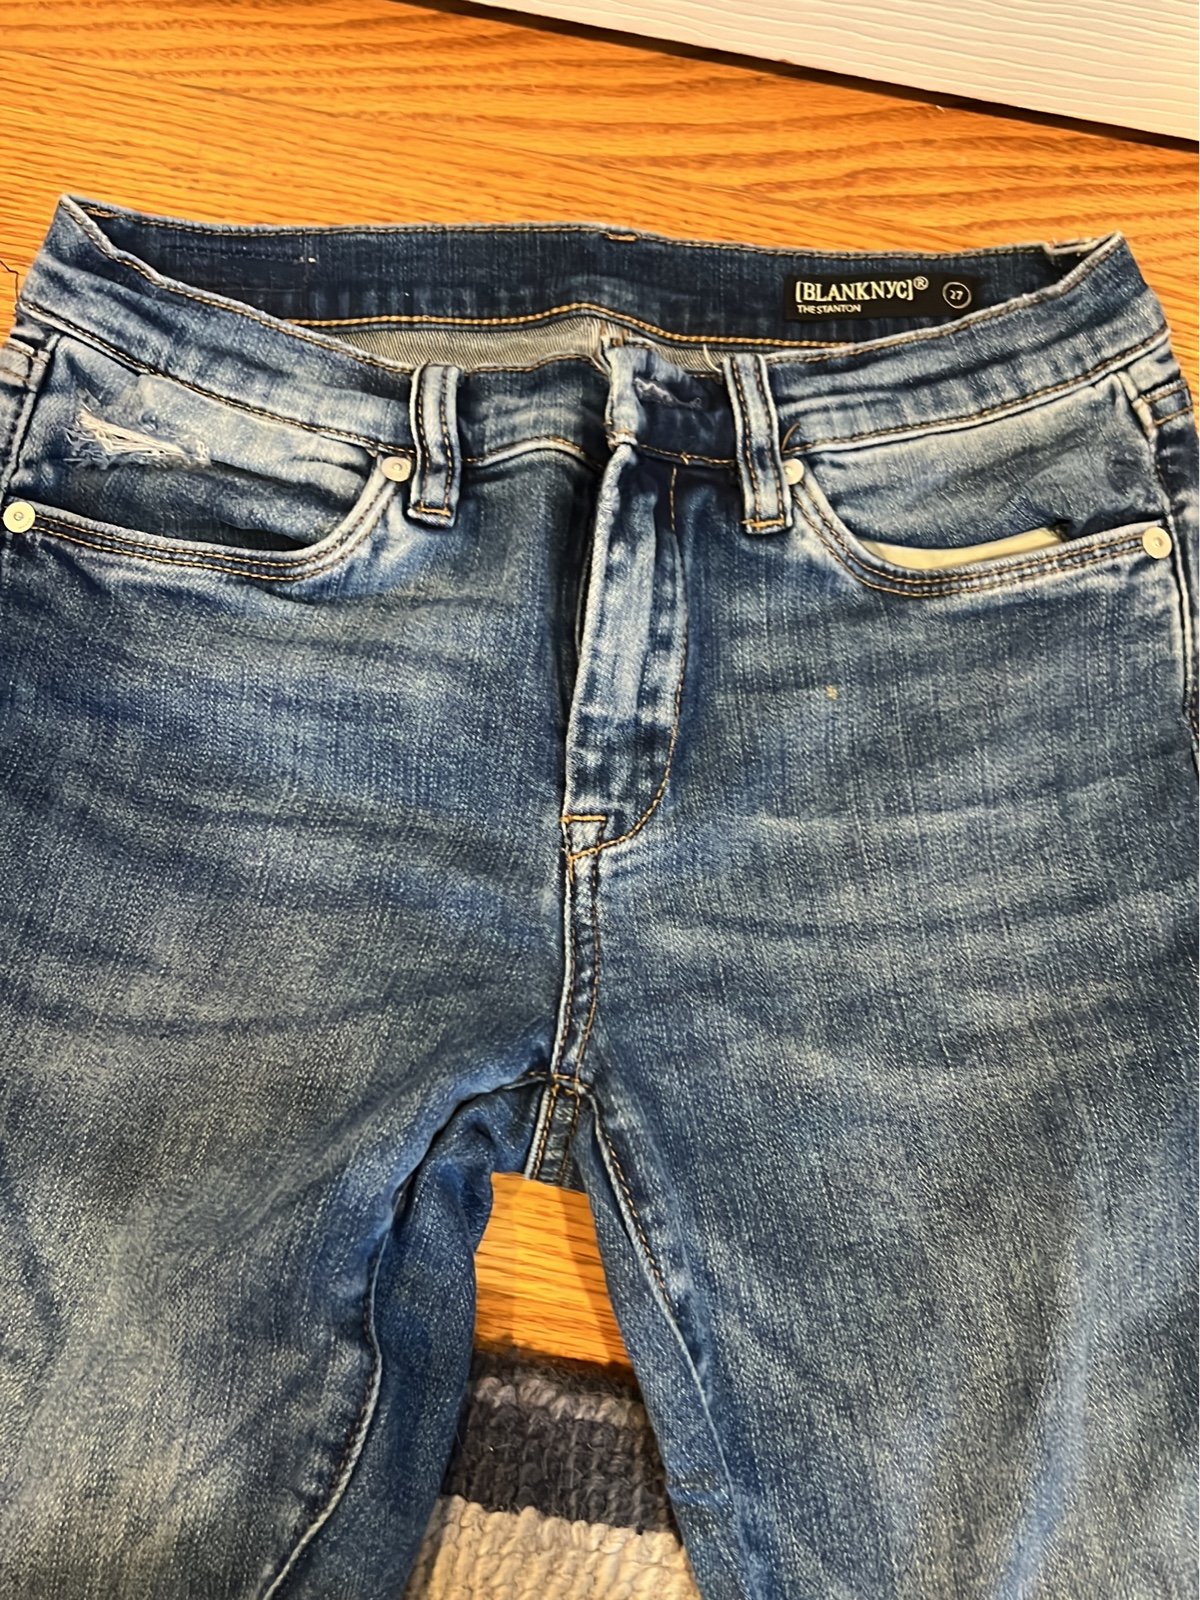 Stylish BlankNYC jeans kRjnoC8hr Online Shop